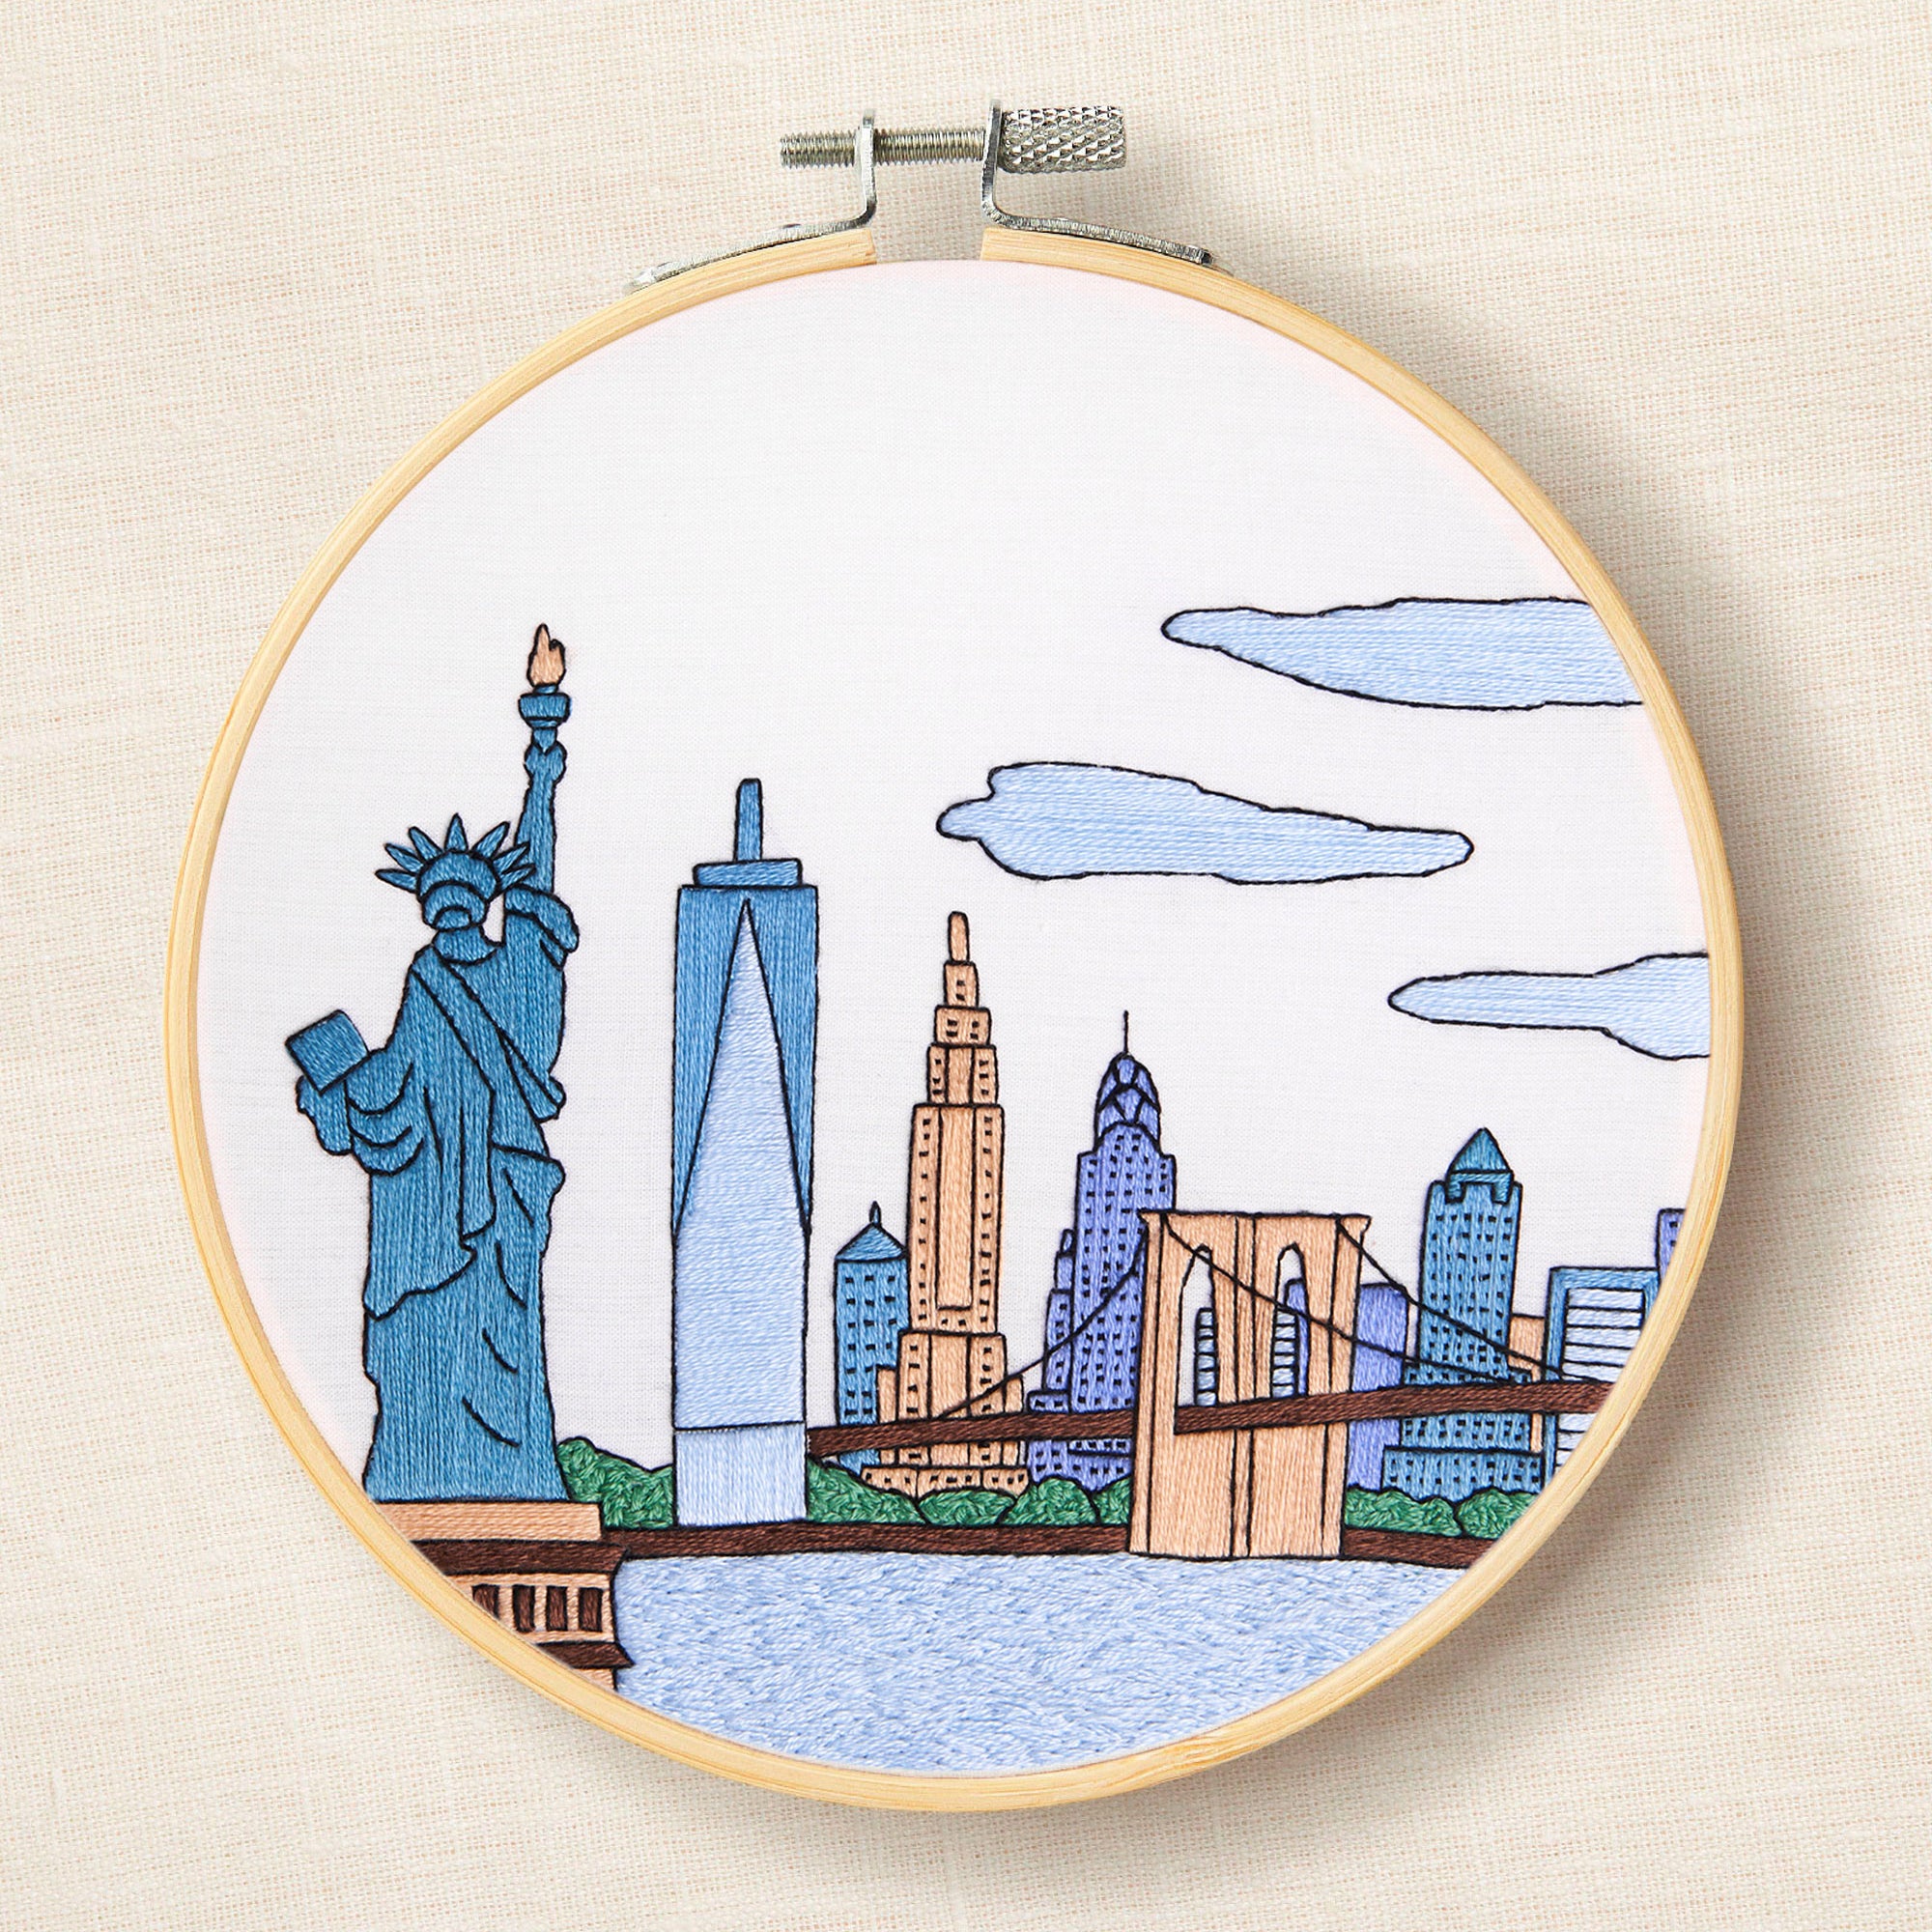 DMC New York City by Kseniia Guseva (Embroidery Kit)